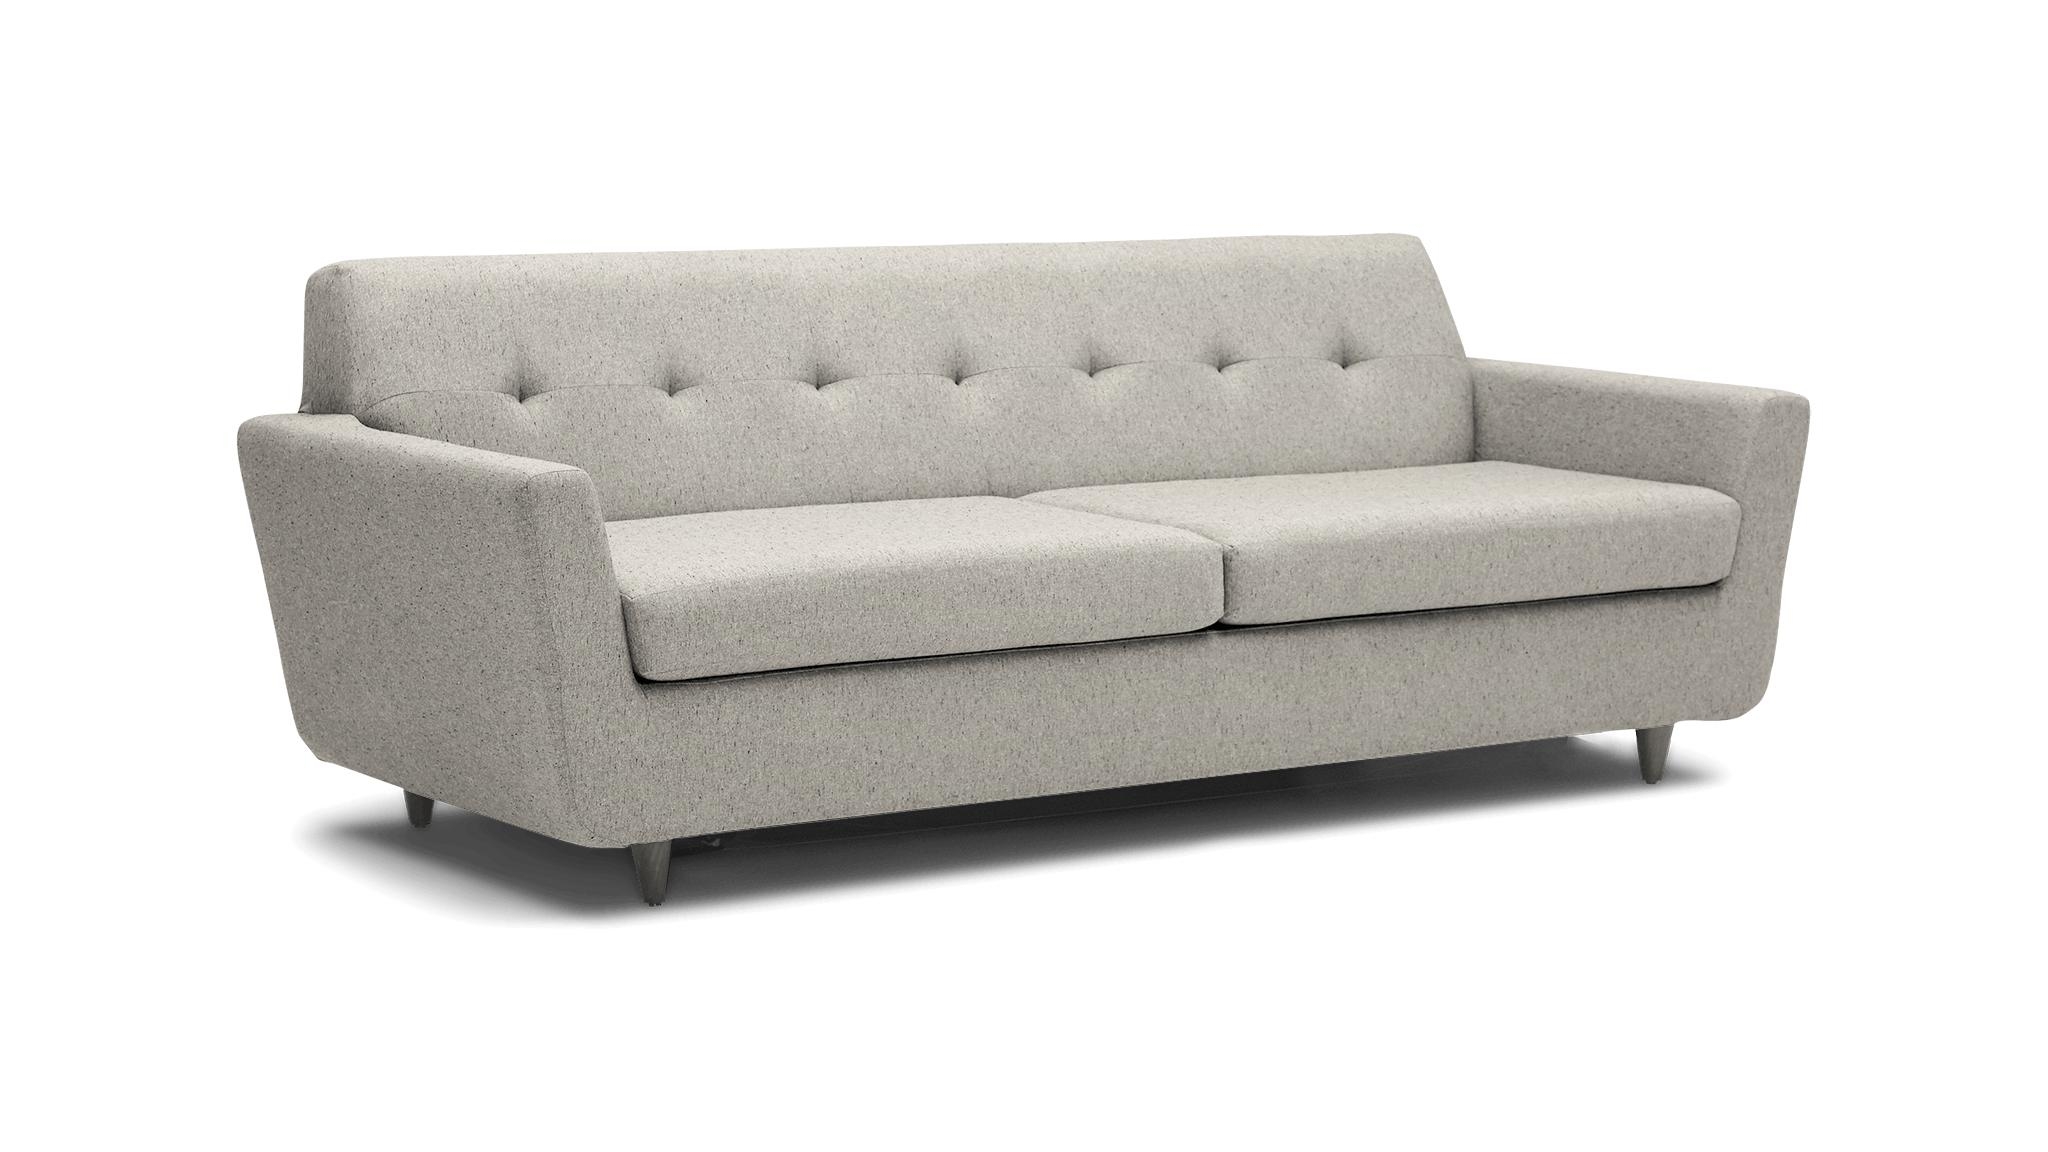 Gray Hughes Mid Century Modern Sleeper Sofa - Bloke Cotton - Mocha - Image 1